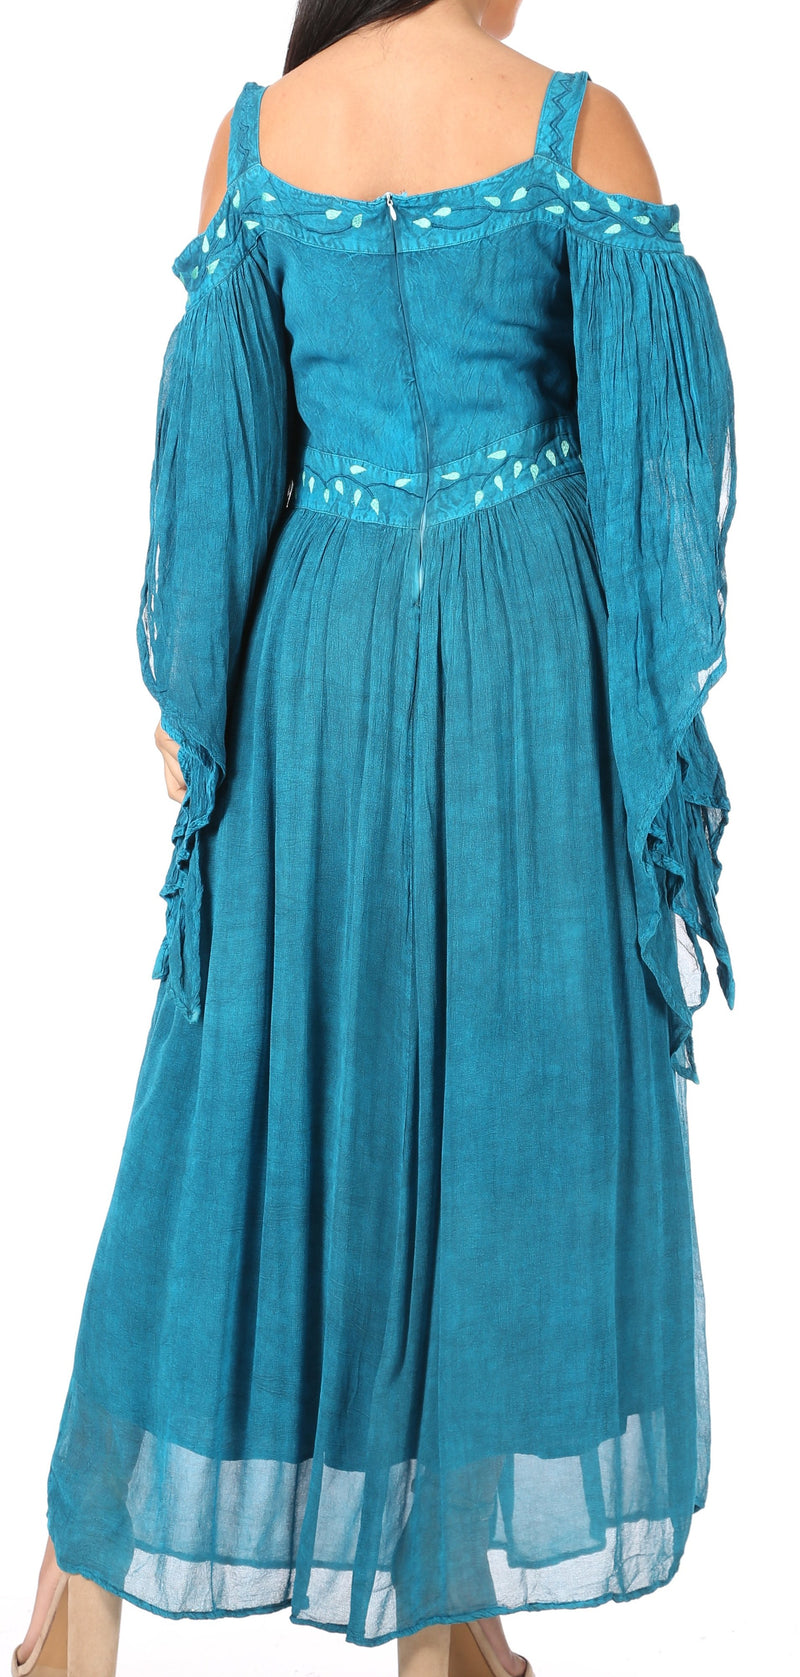 Sakkas Roisin Women's Medieval Celtic Renaissance Long Sleeve Costume Dress